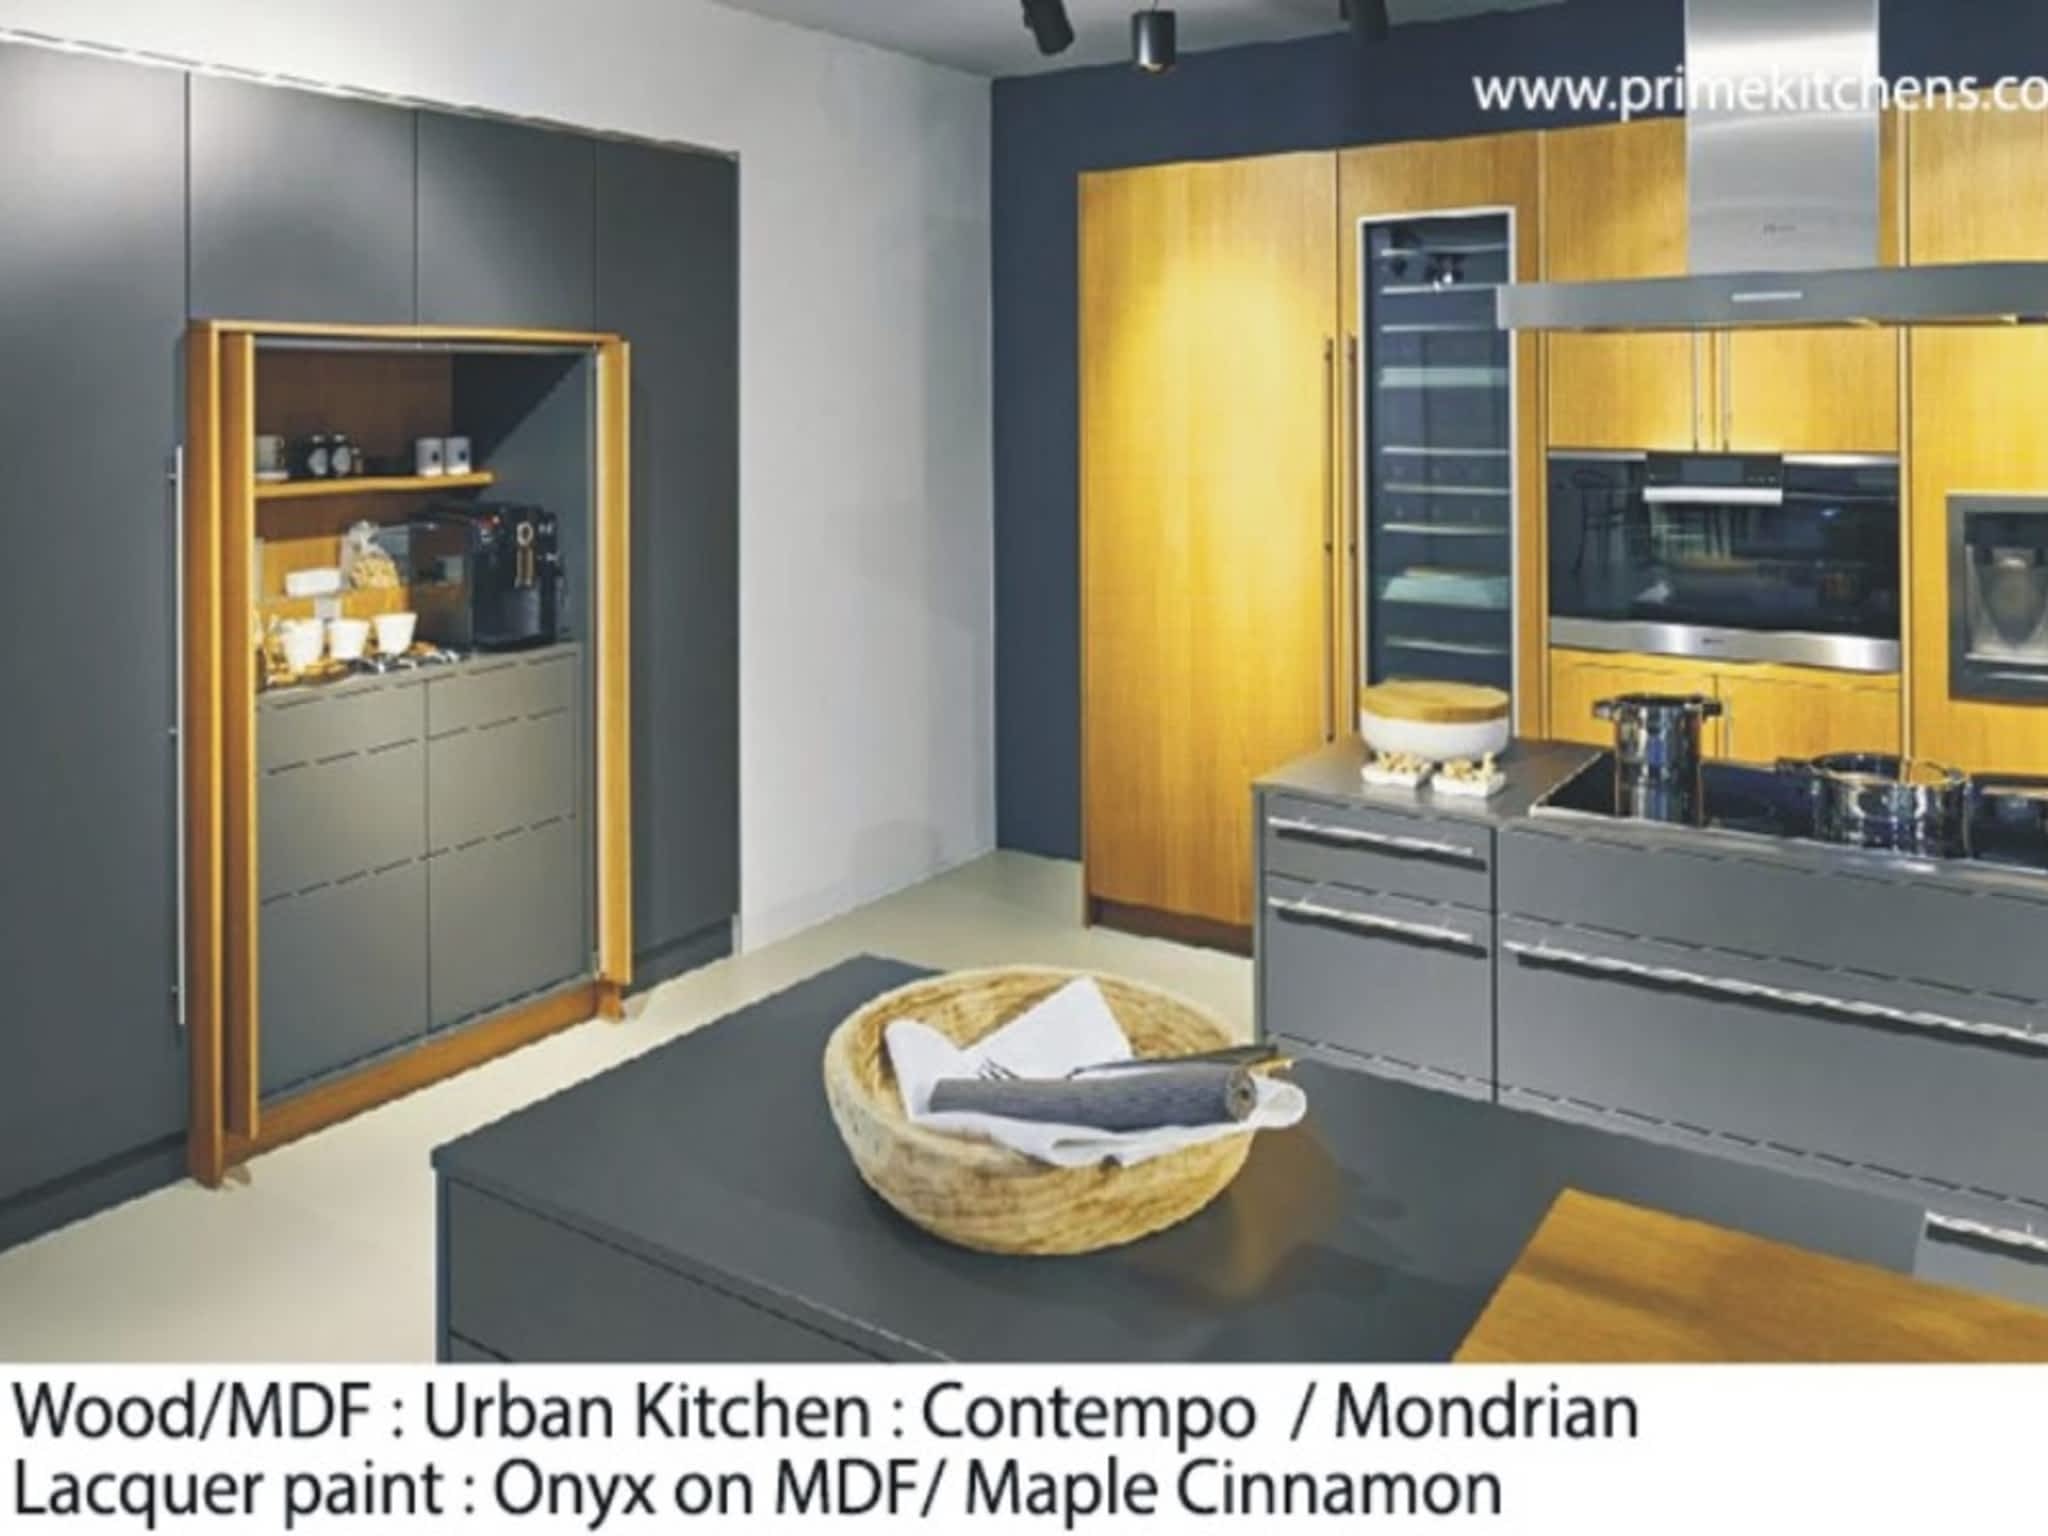 photo Prime Kitchen Cabinets Inc